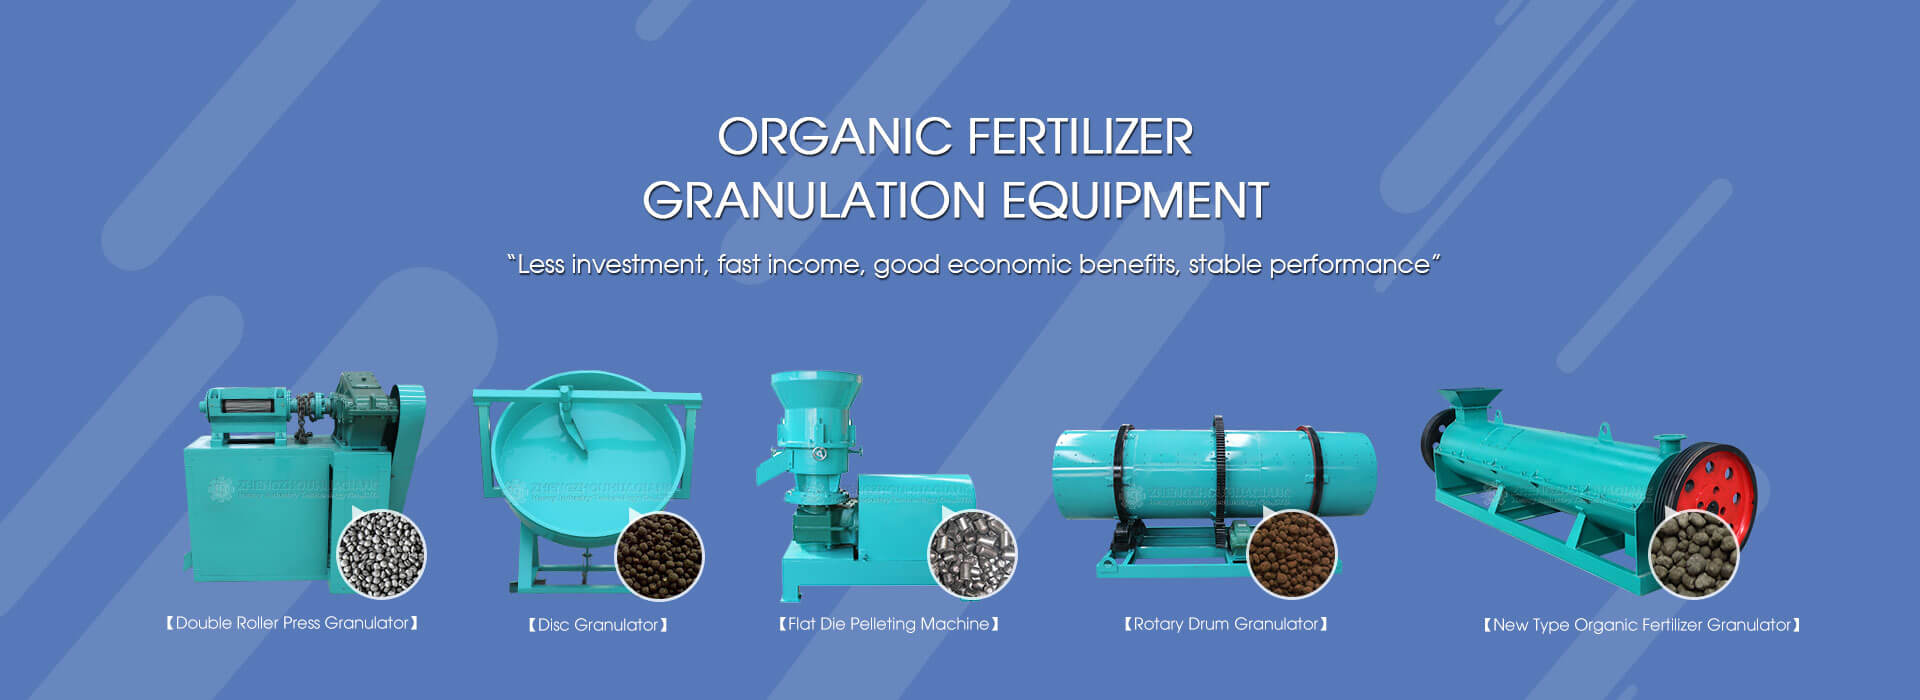 Organic Fertilizer Granulation Equipment